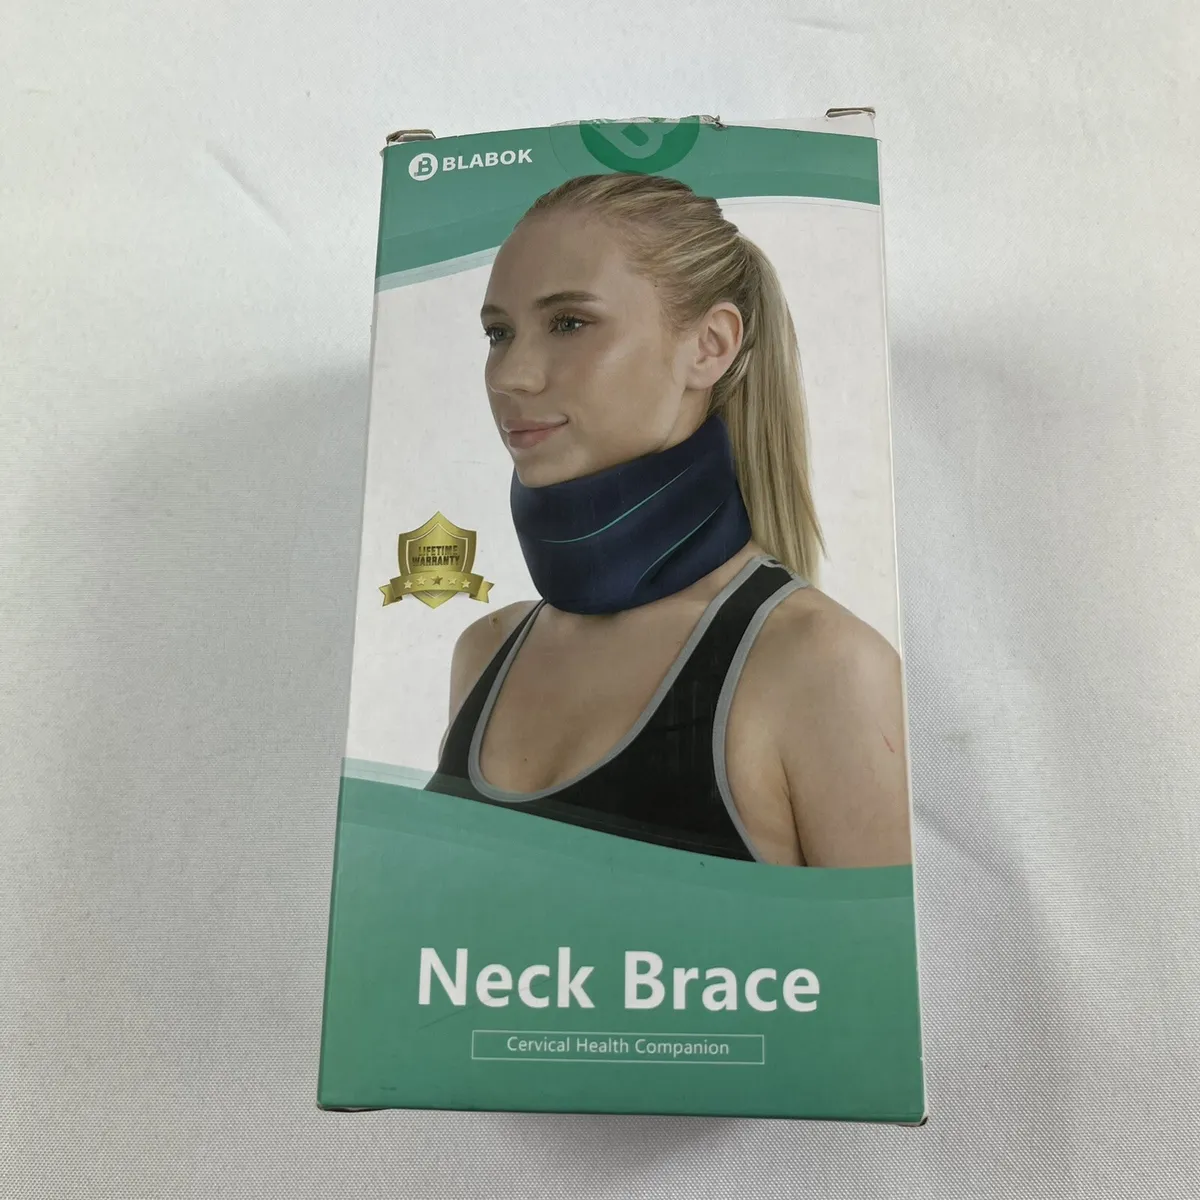 brabok neck brace cervical healt companion size M